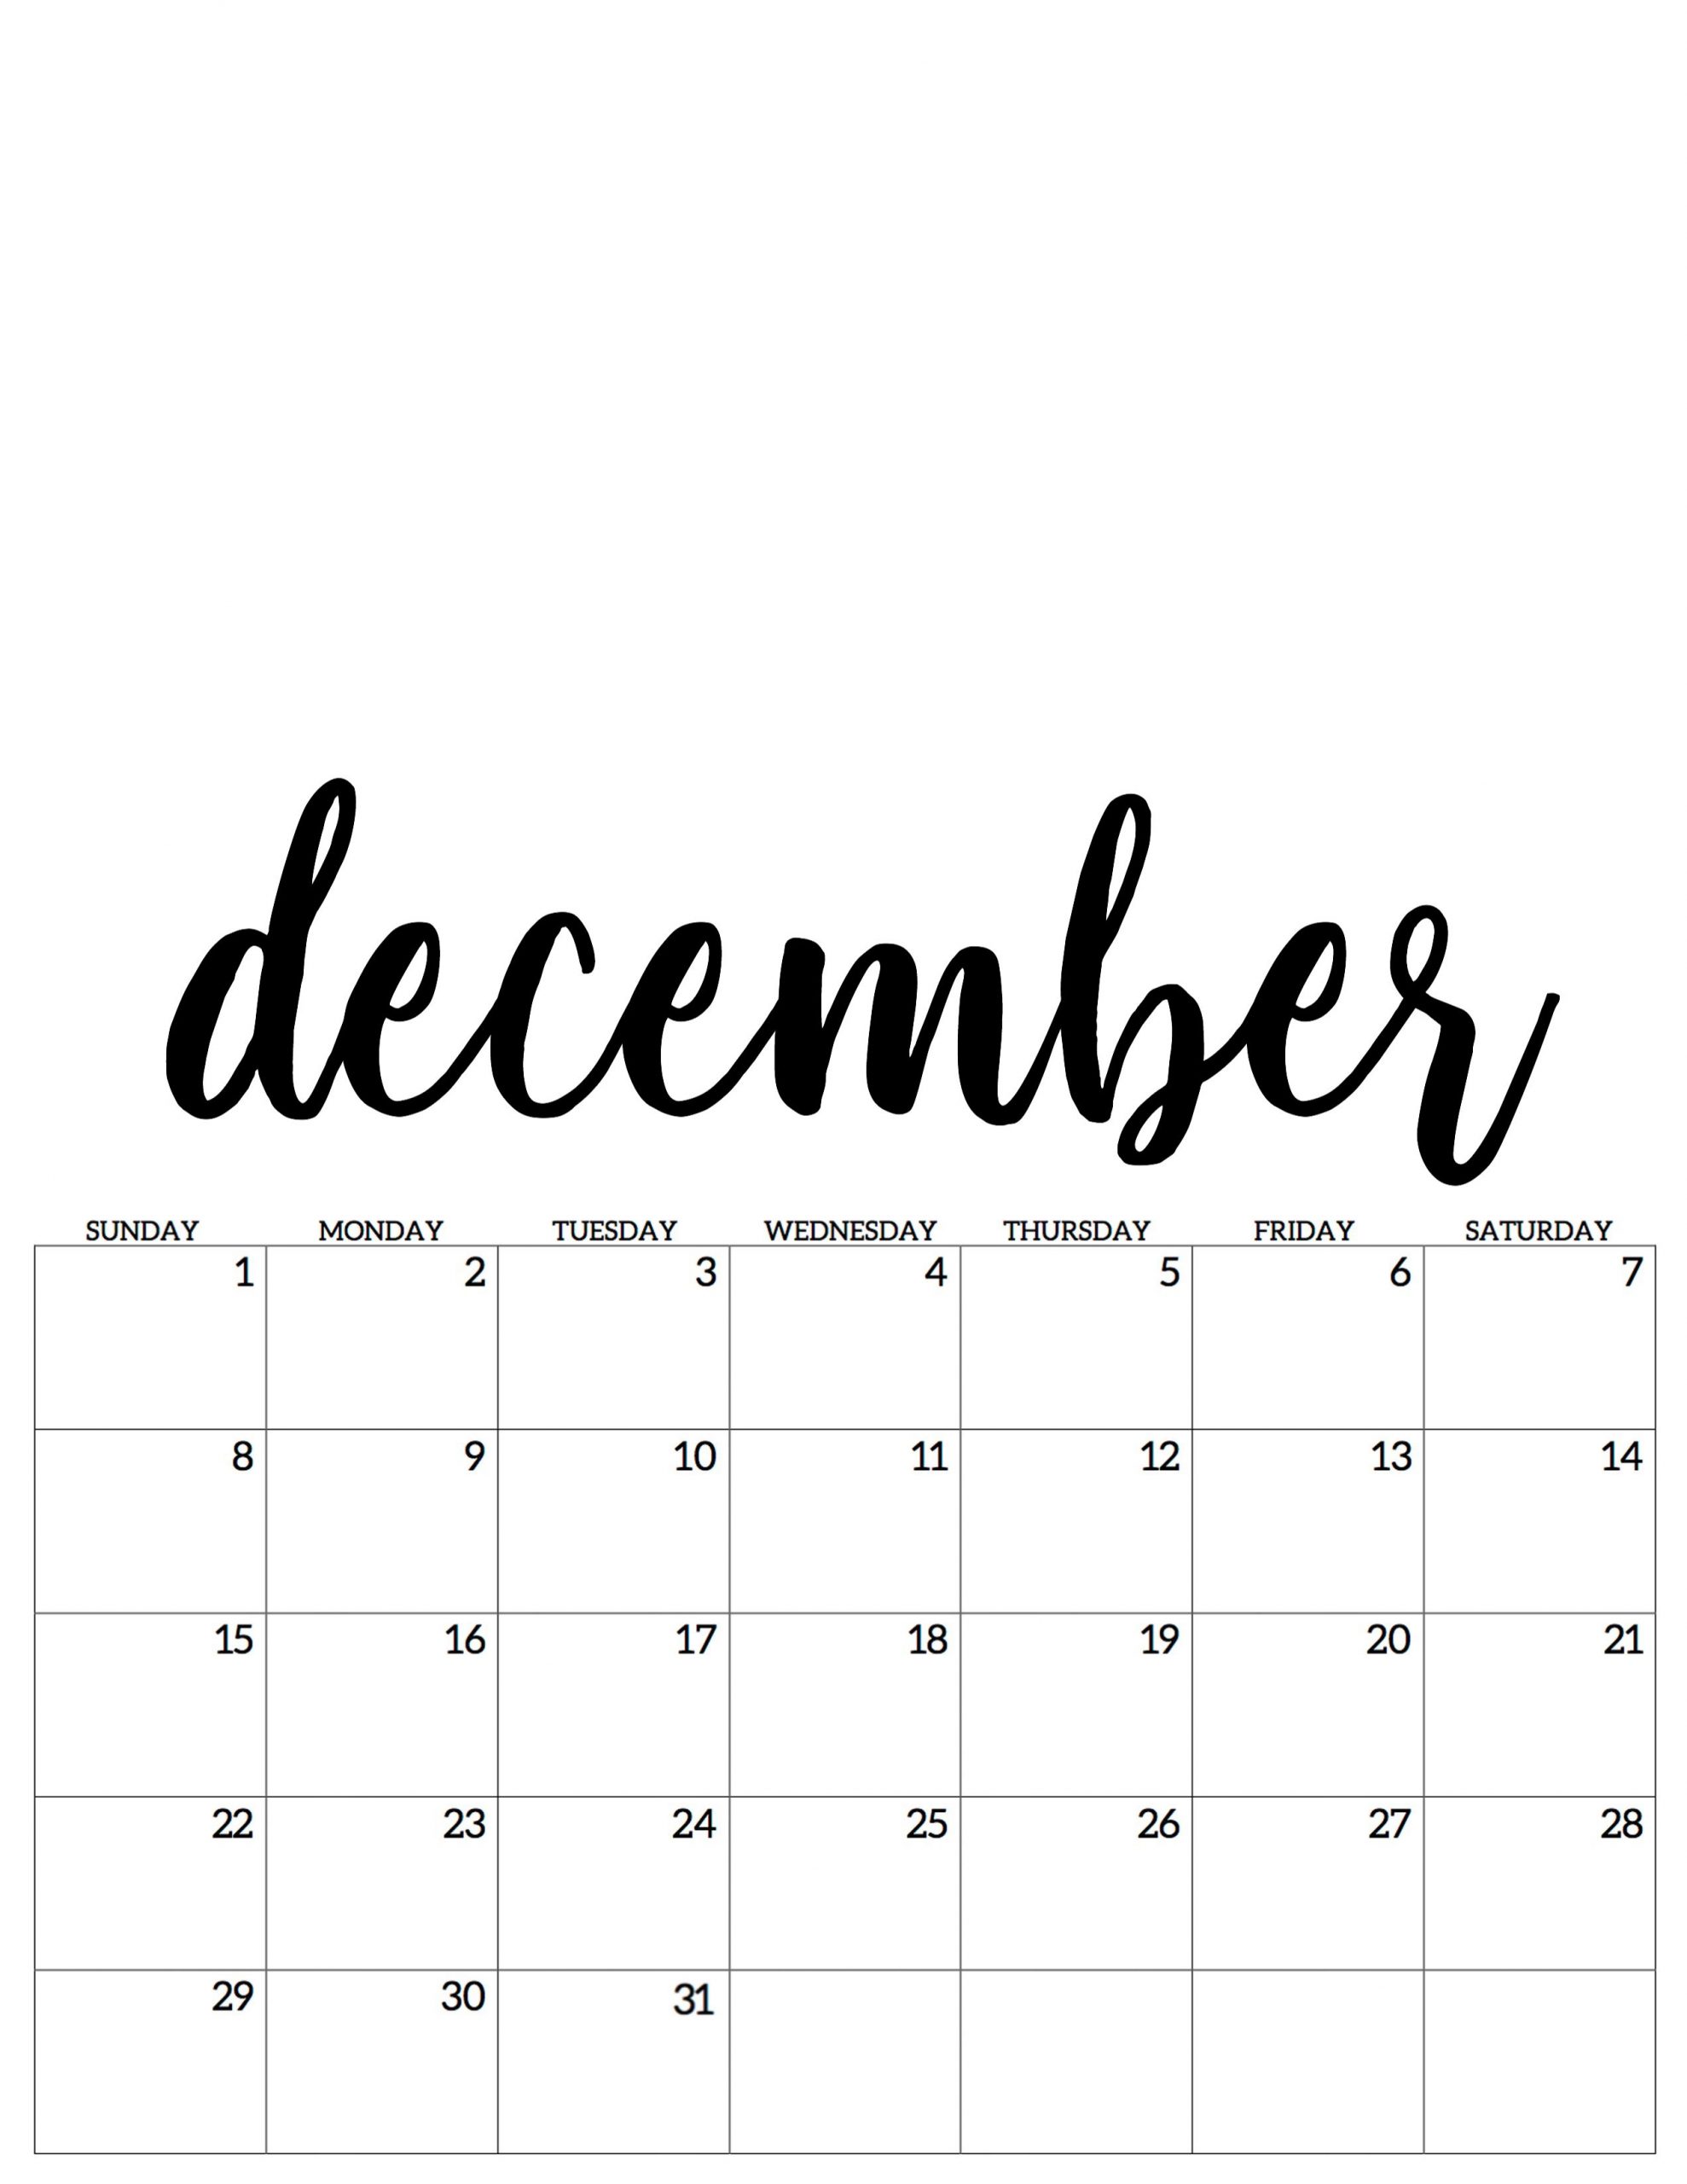 December Dezember Kalender Calendar 2019 | Dezember Kalender bestimmt für Kalenderblatt Monat